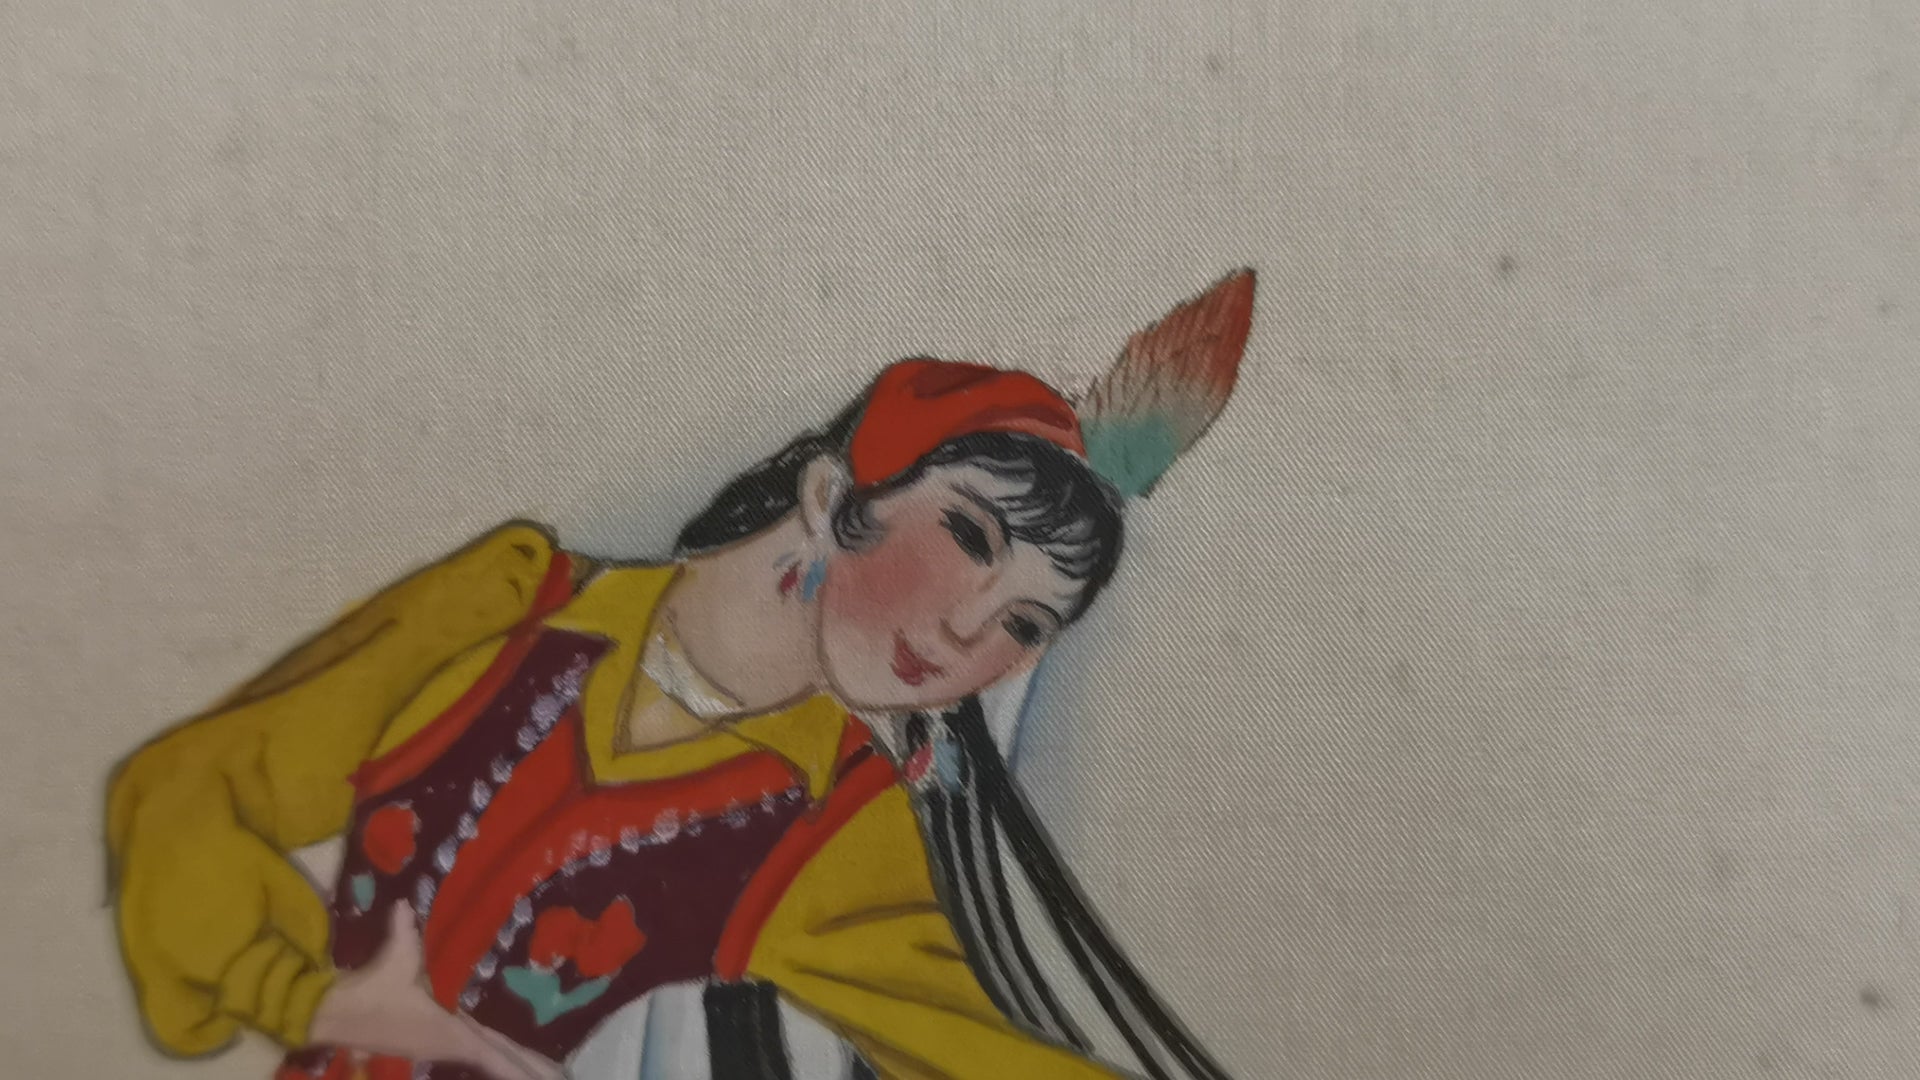 Uigurian Maxilep Dancer Perception Handmade Art Printing Characters Instruments Ethnicdances with Wood Frame